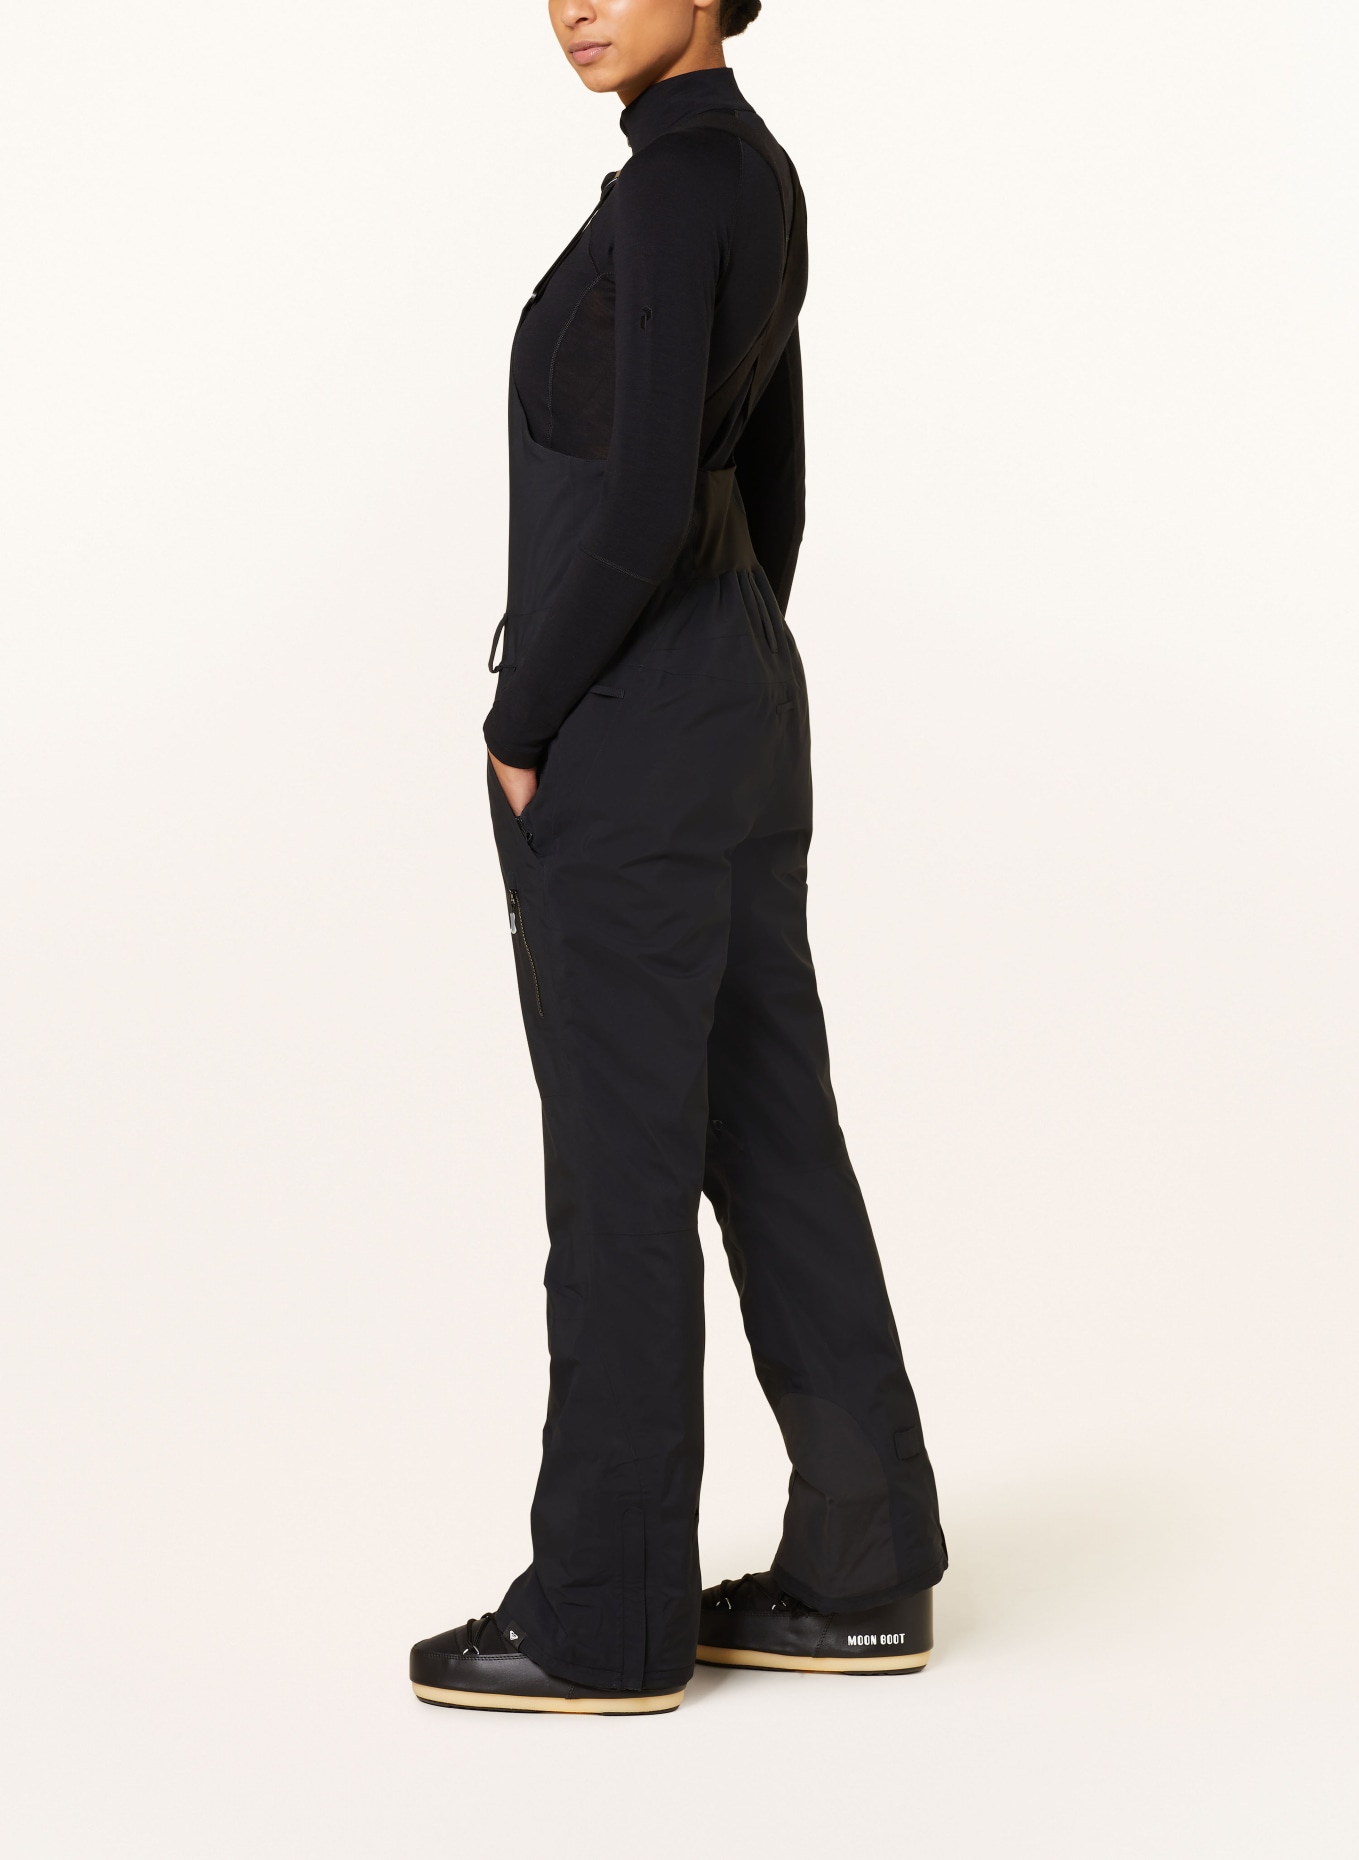 GORE-TEX® Stretch Prism - Technical Snow Bib Pants for Women